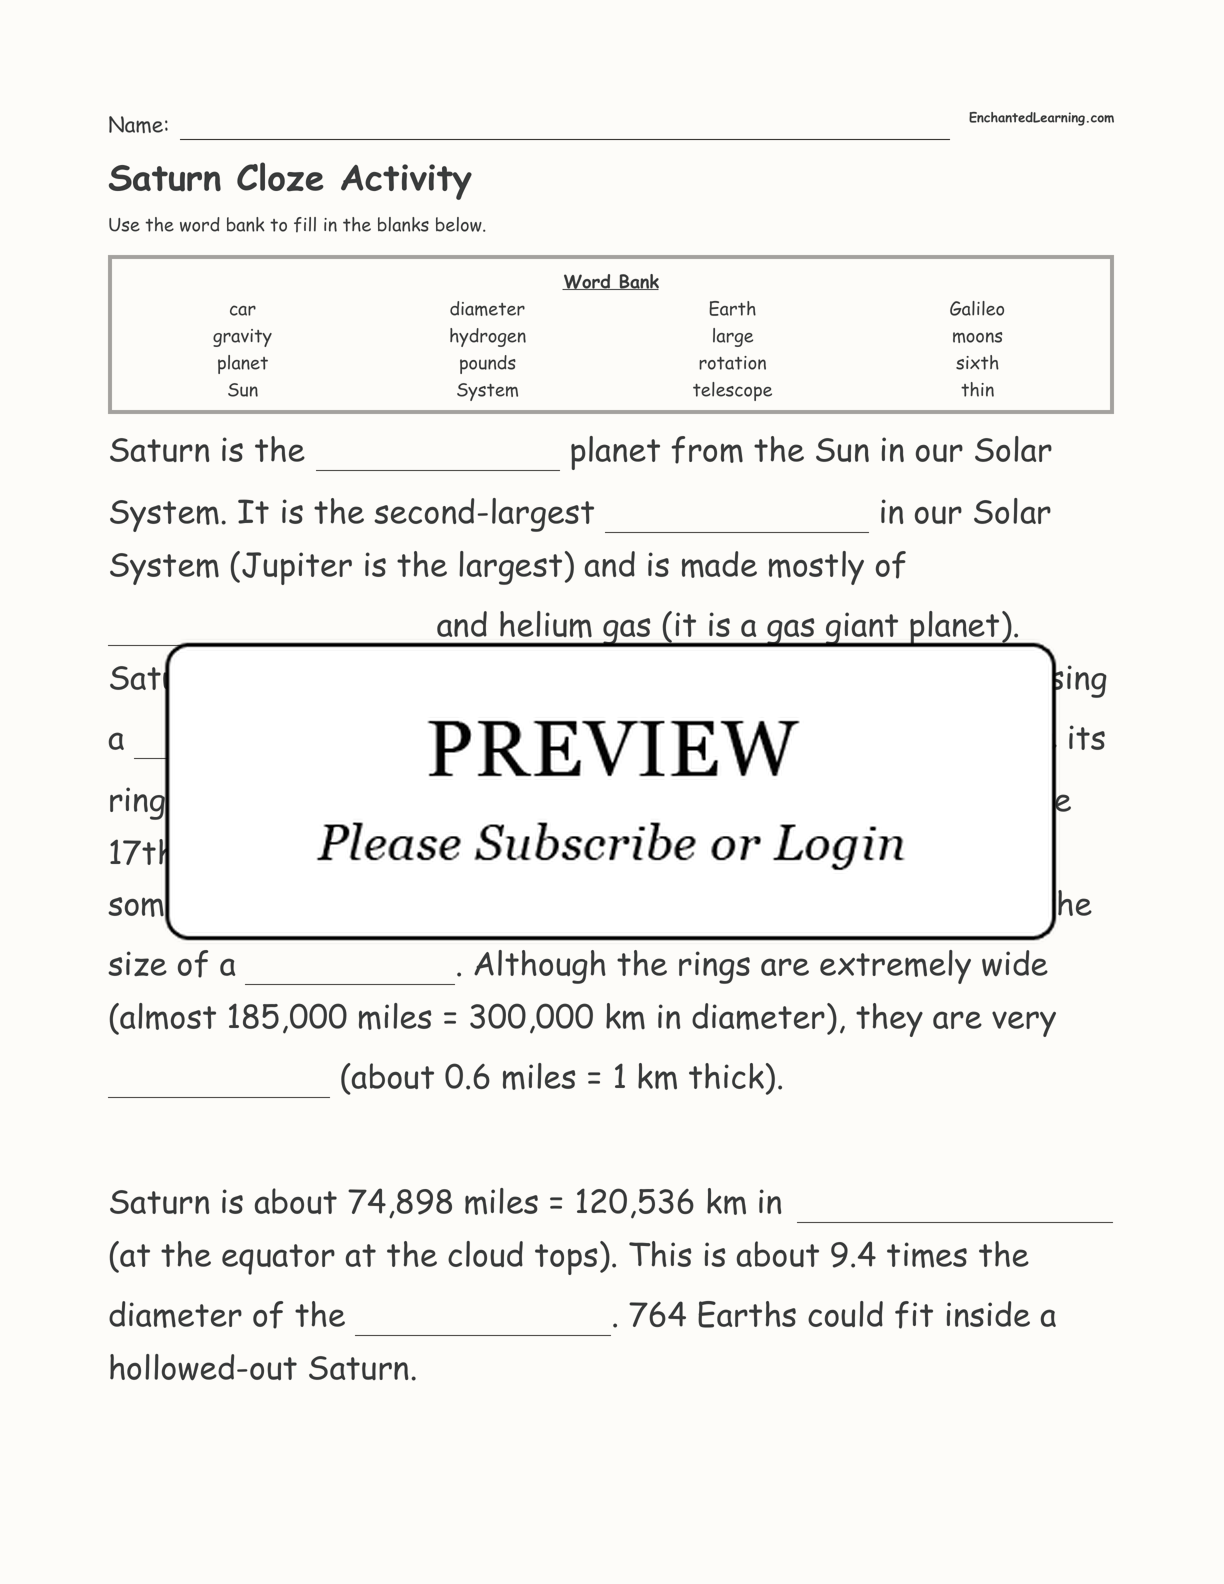 Saturn Cloze Activity interactive worksheet page 1